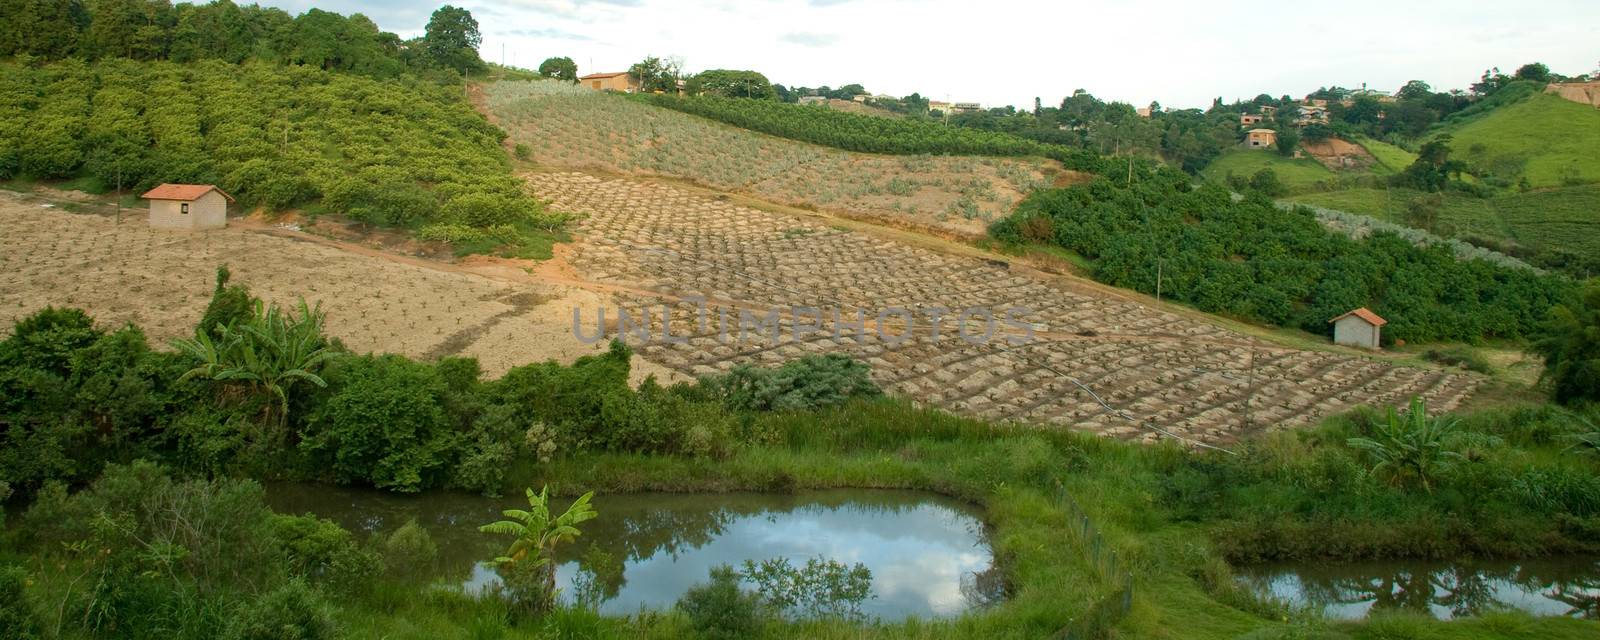 Rural scene found in the countryside of Sao Paulo, Brazil